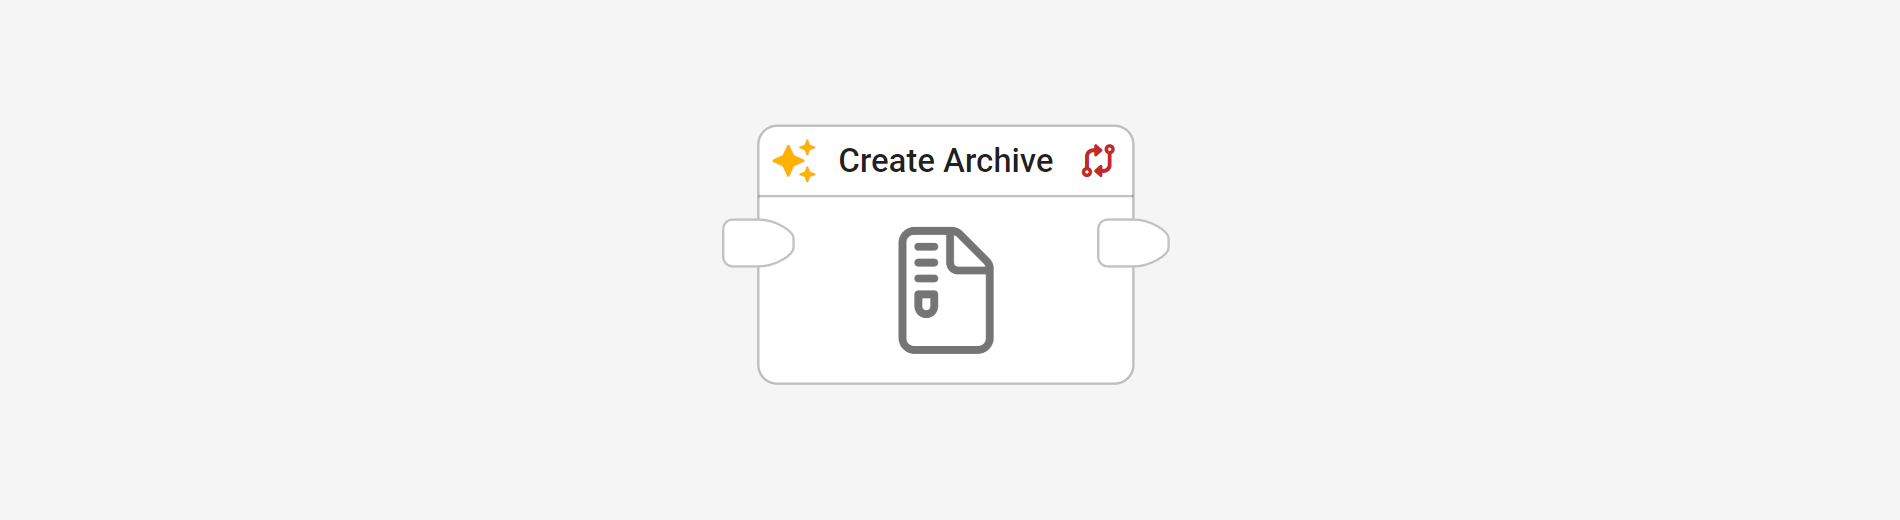 Create Archive block in flow editor